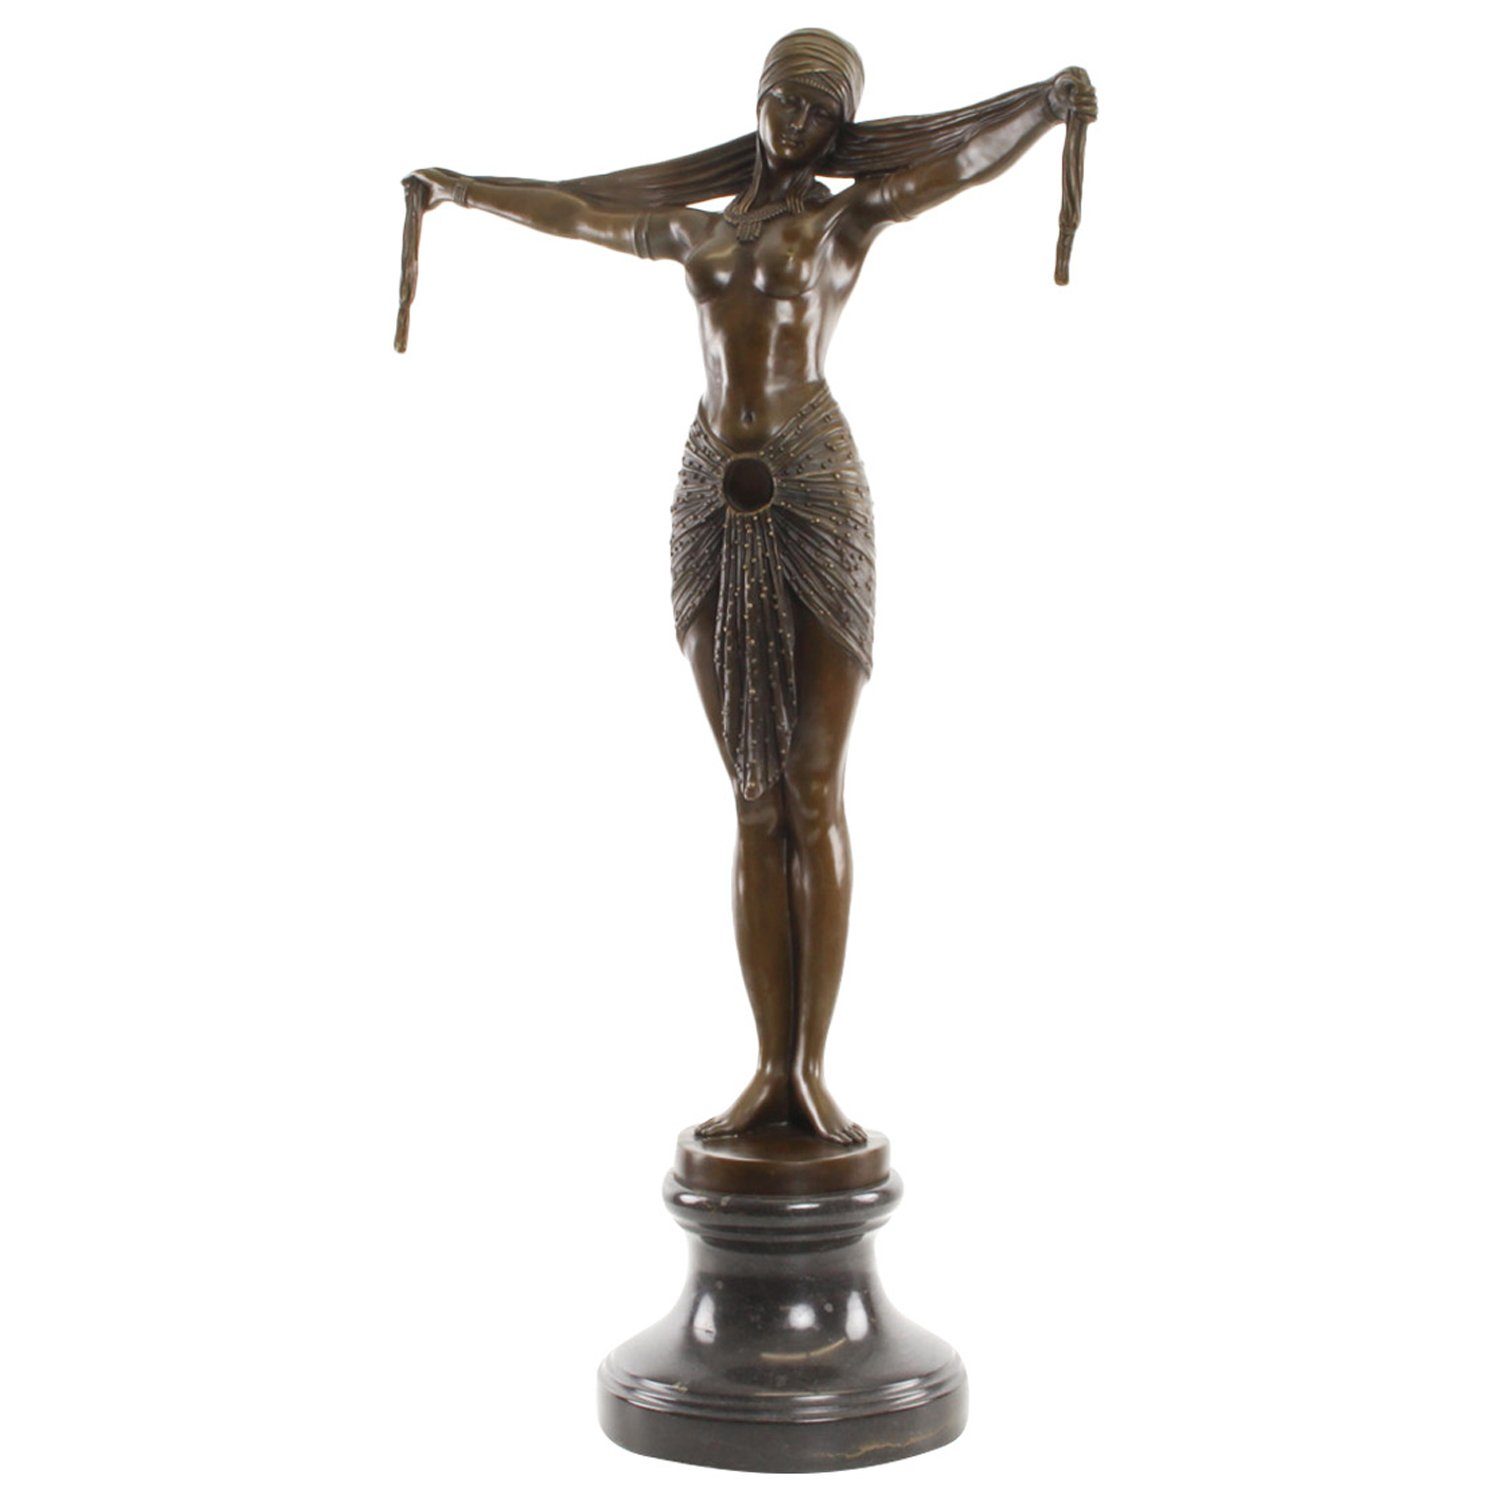 Aubaho Skulptur Bronzeskulptur Schaltänzerin Figur Moderne Skulptur Artdeco-Antik-Stil